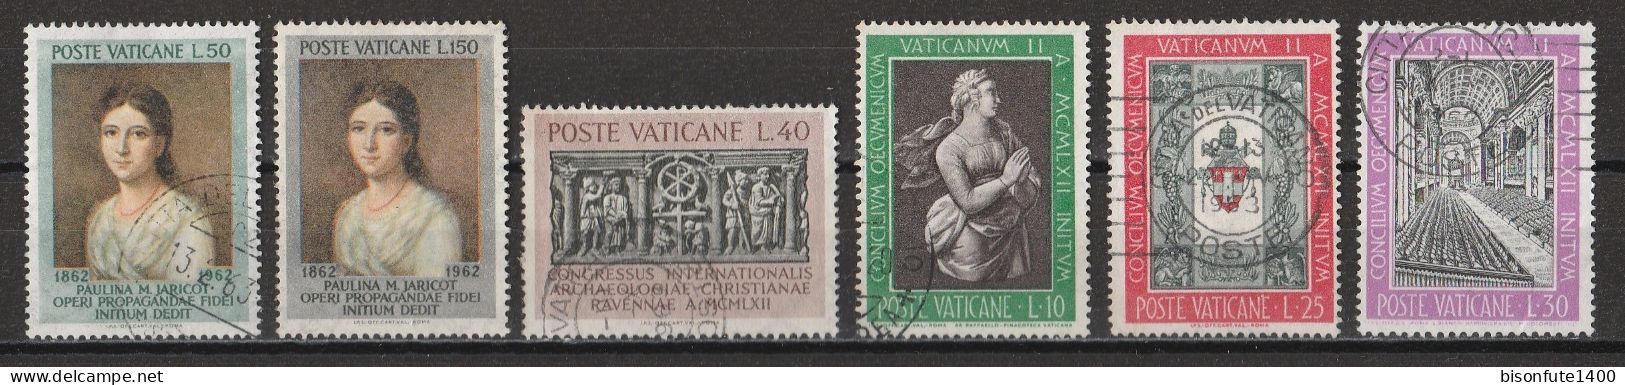 Vatican 1962 : Timbres Yvert & Tellier N° 357 - 358 - 360 - 364 - 366 - 367 - 368 - 369 - 370 - 371 Et 372 Oblitérés. - Usados